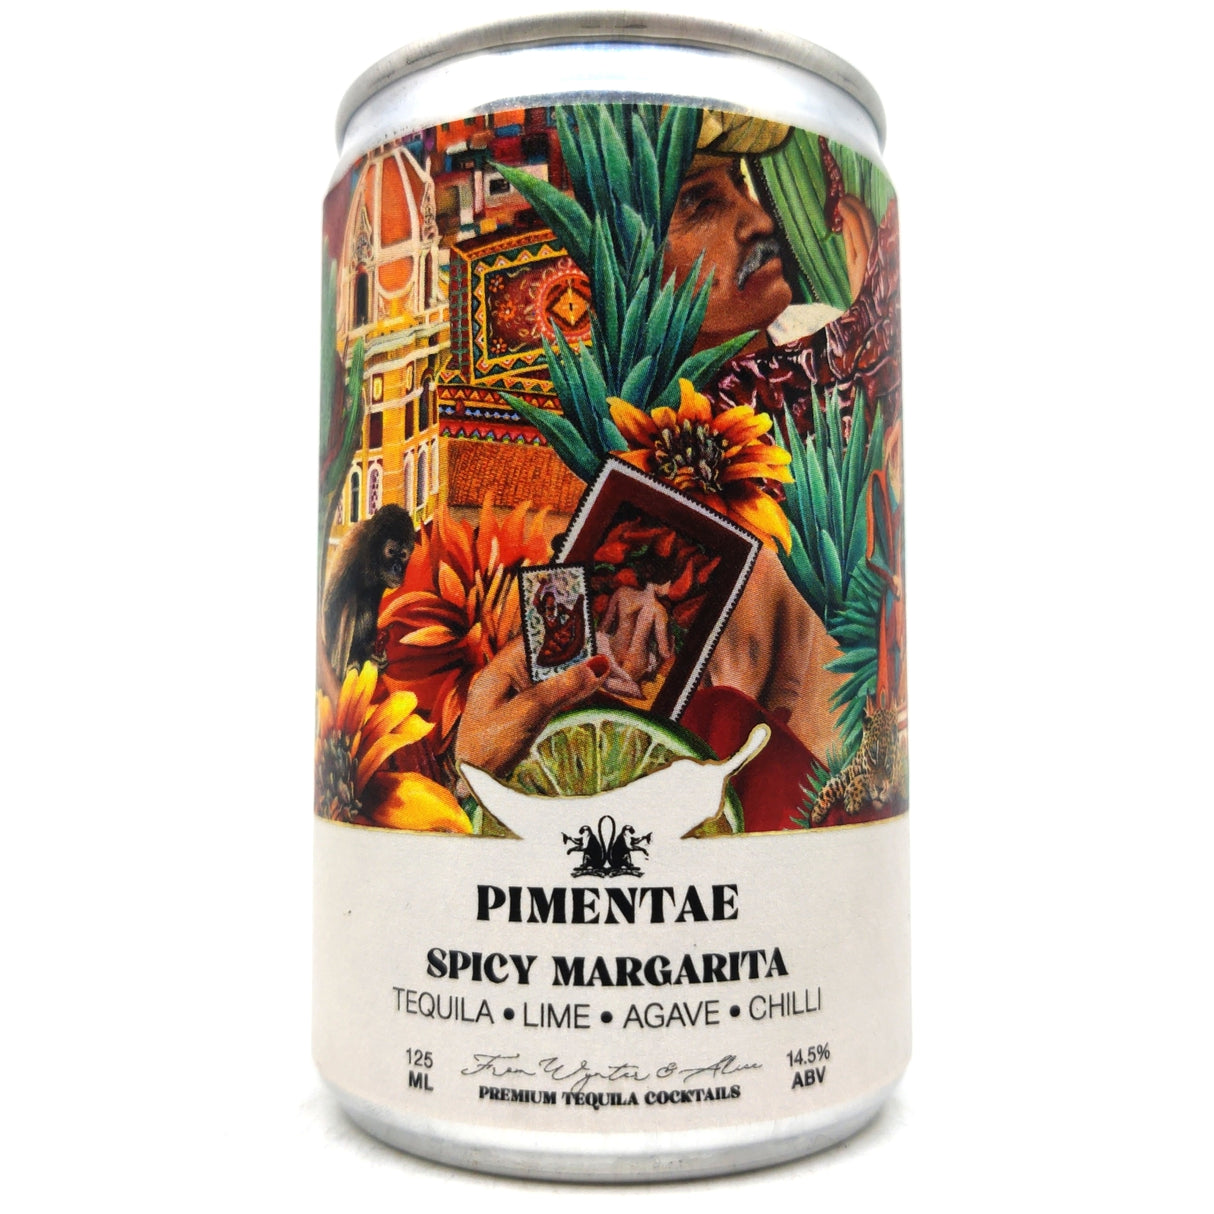 Pimentae Spicy Margarita 14.5% (125ml can)-Hop Burns & Black